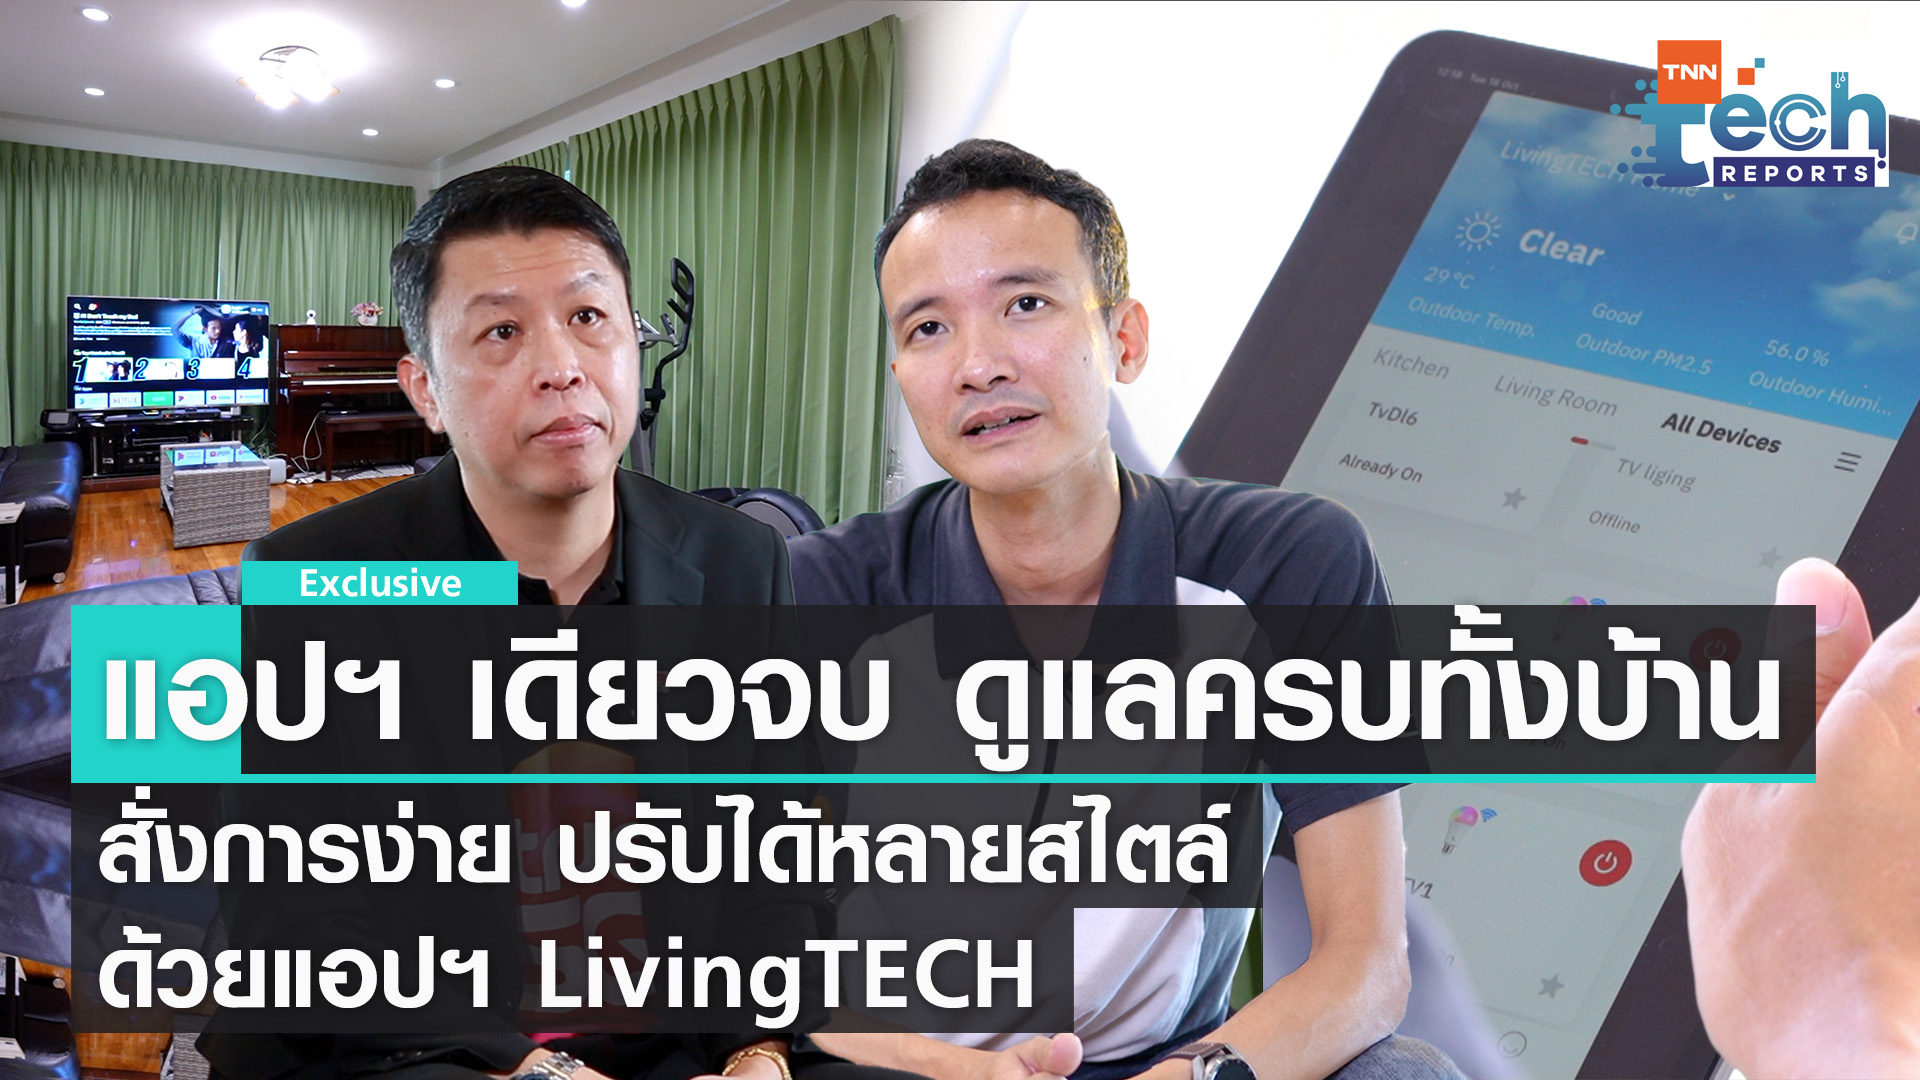 LivingTECH แอปฯ เดียวจบ ดูแลครบได้ทั้งบ้าน I TNN Tech Reports Weekly